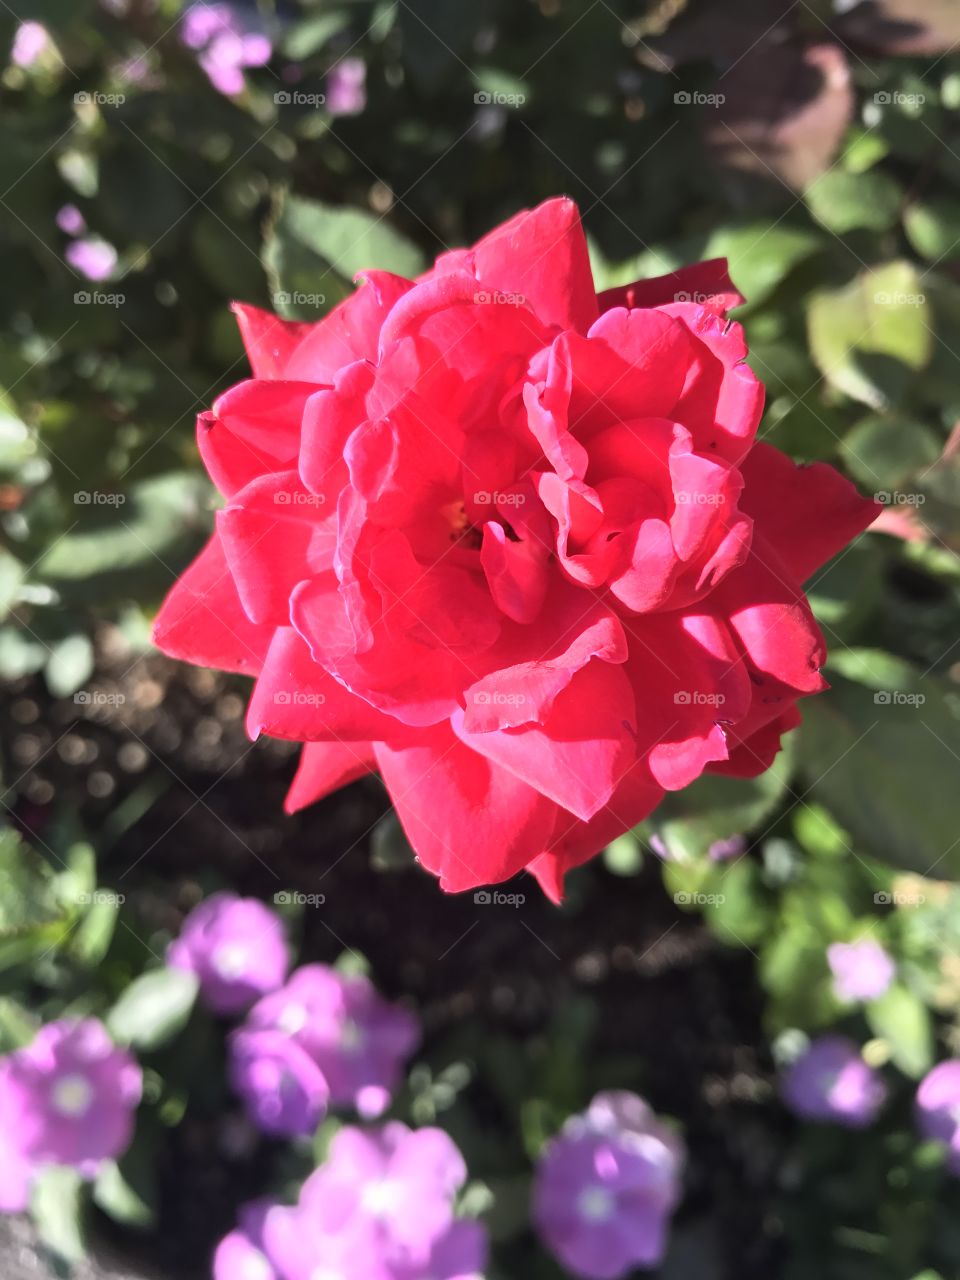 Beautiful pink rose